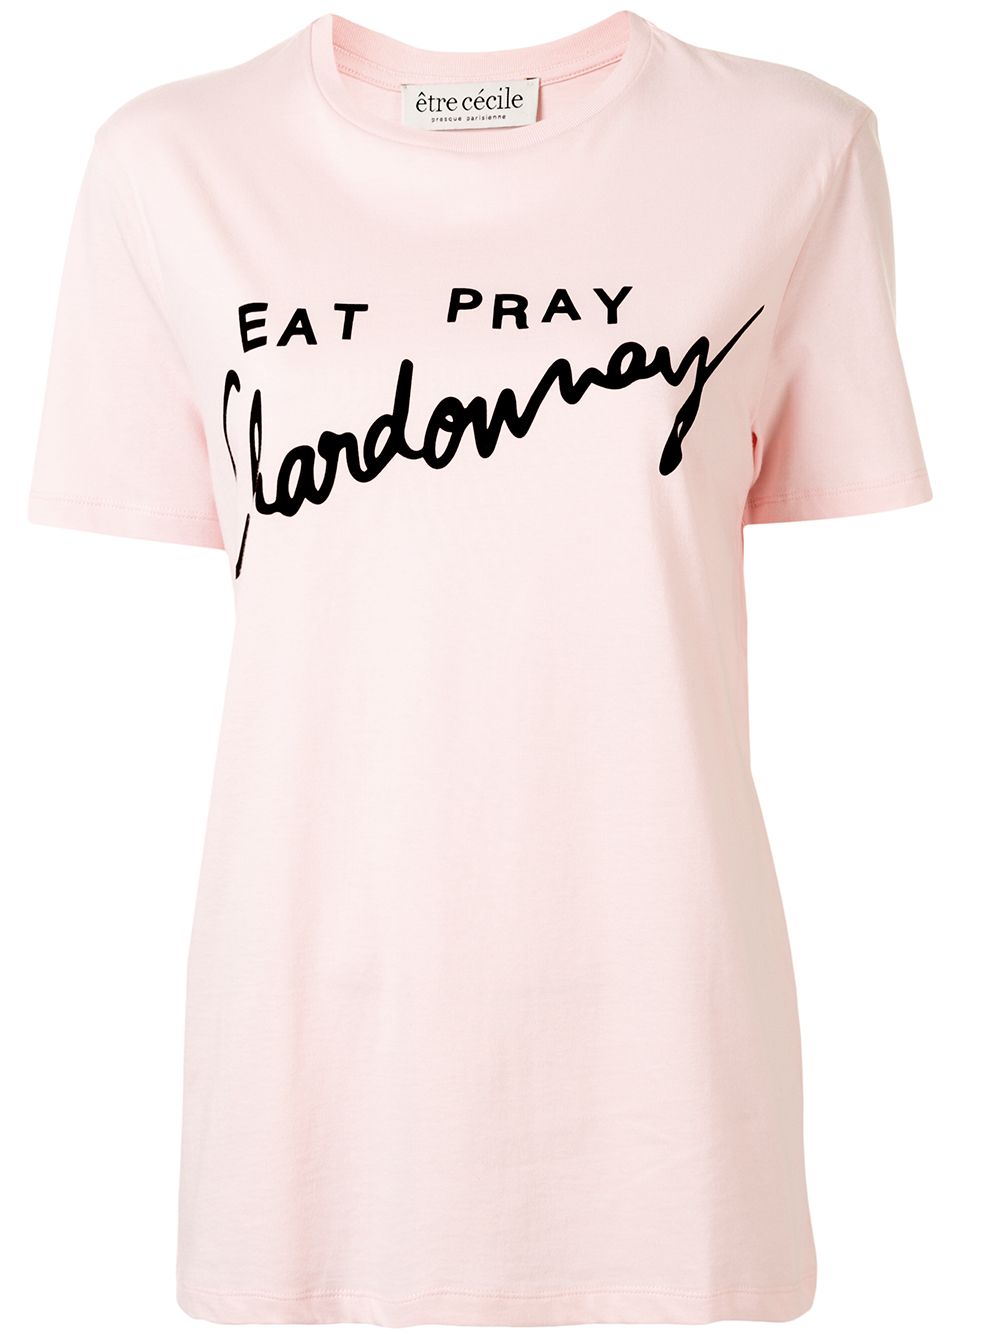 фото Être cécile футболка eat pray chardonnay с принтом